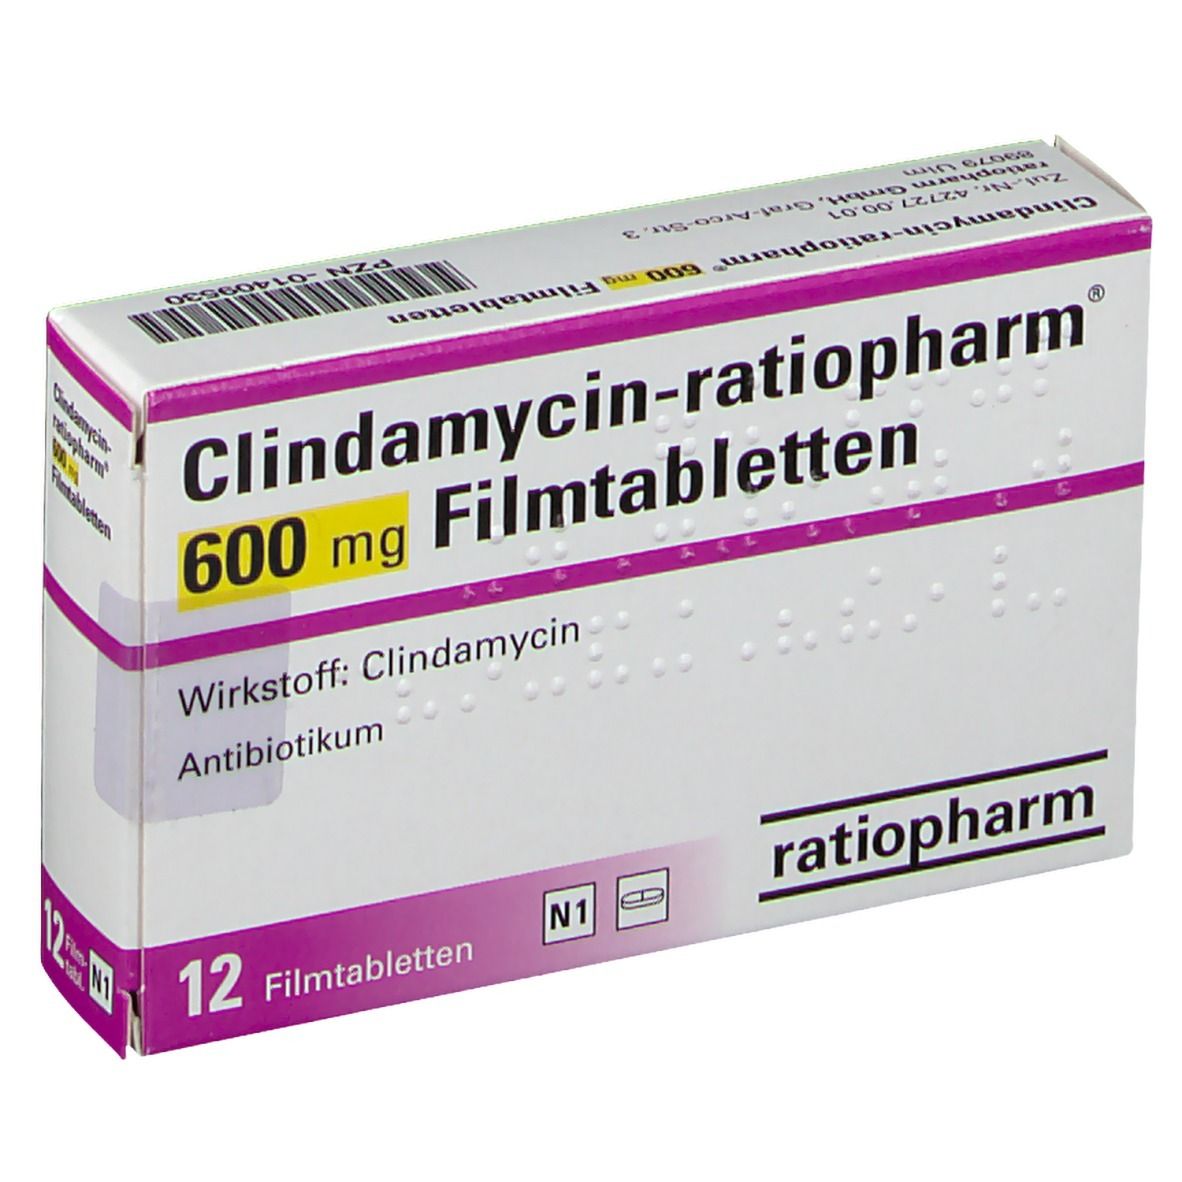 Clindamycin-ratiopharm® 600 mg